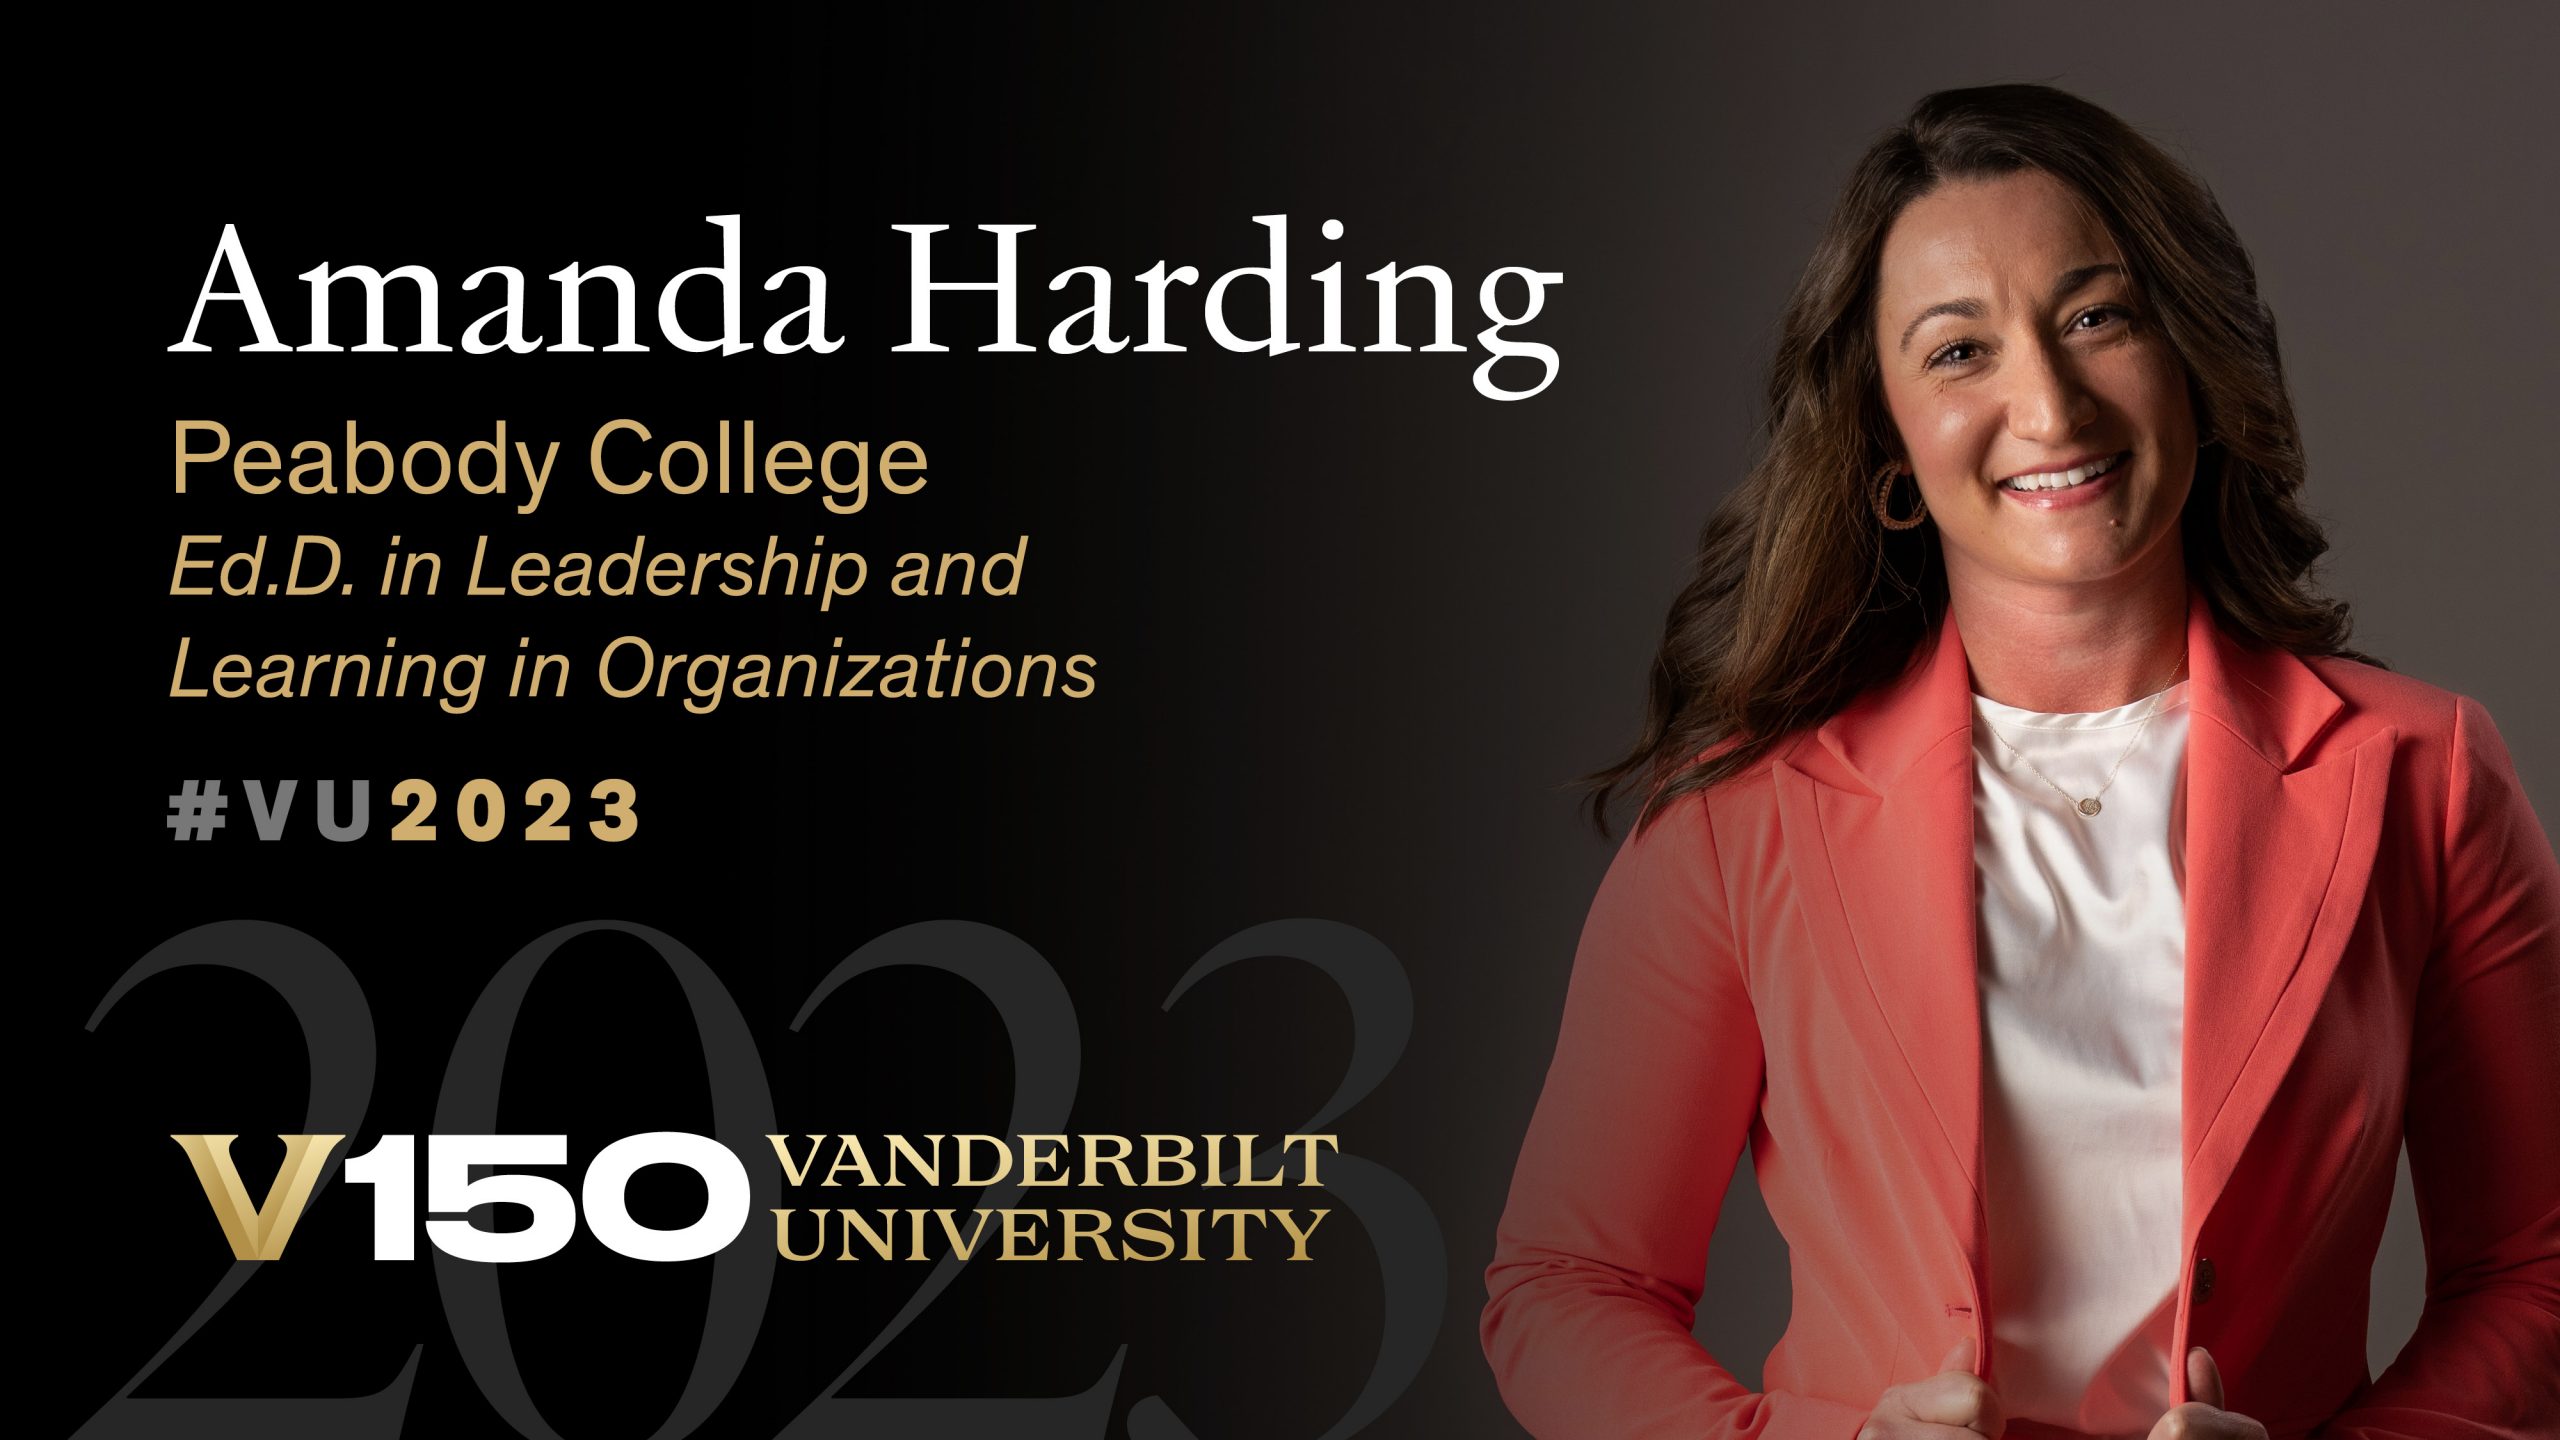 Class of 2023: Online doctoral student Amanda Harding is helping Vanderbilt grow in digital education